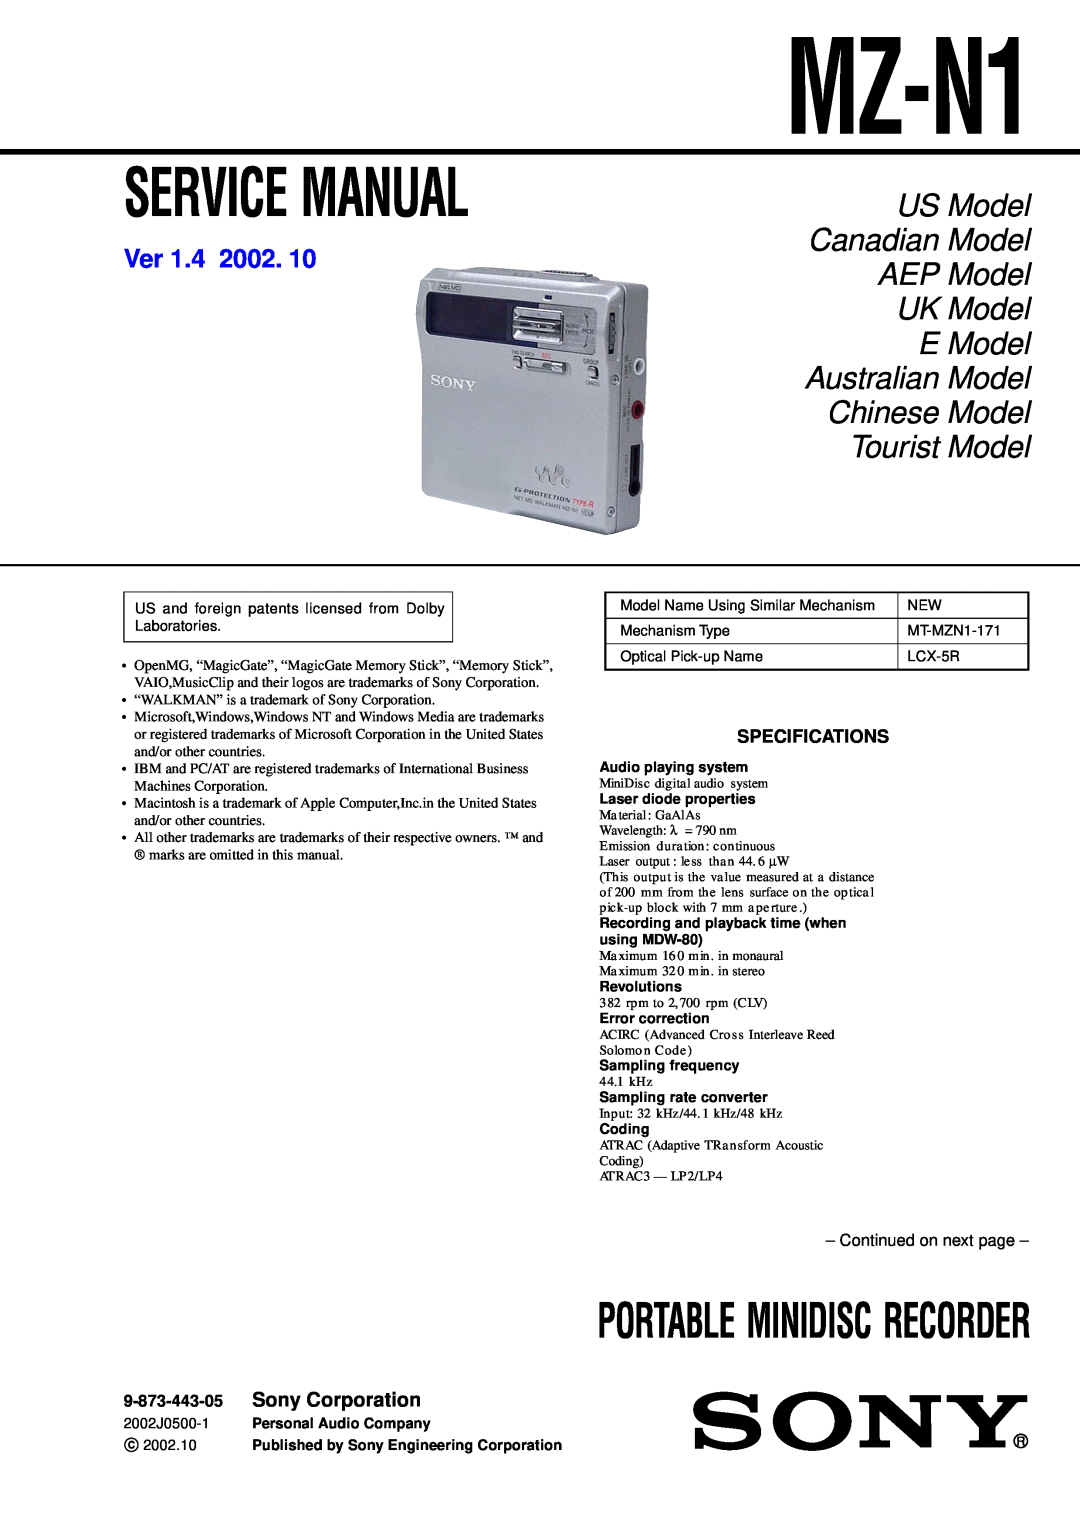 Sony MZ-N1 service manual Portable Minidisc Recorder, AEP Model, UK Model, E Model, Ver, Sony Corporation, 9-873-443-01 